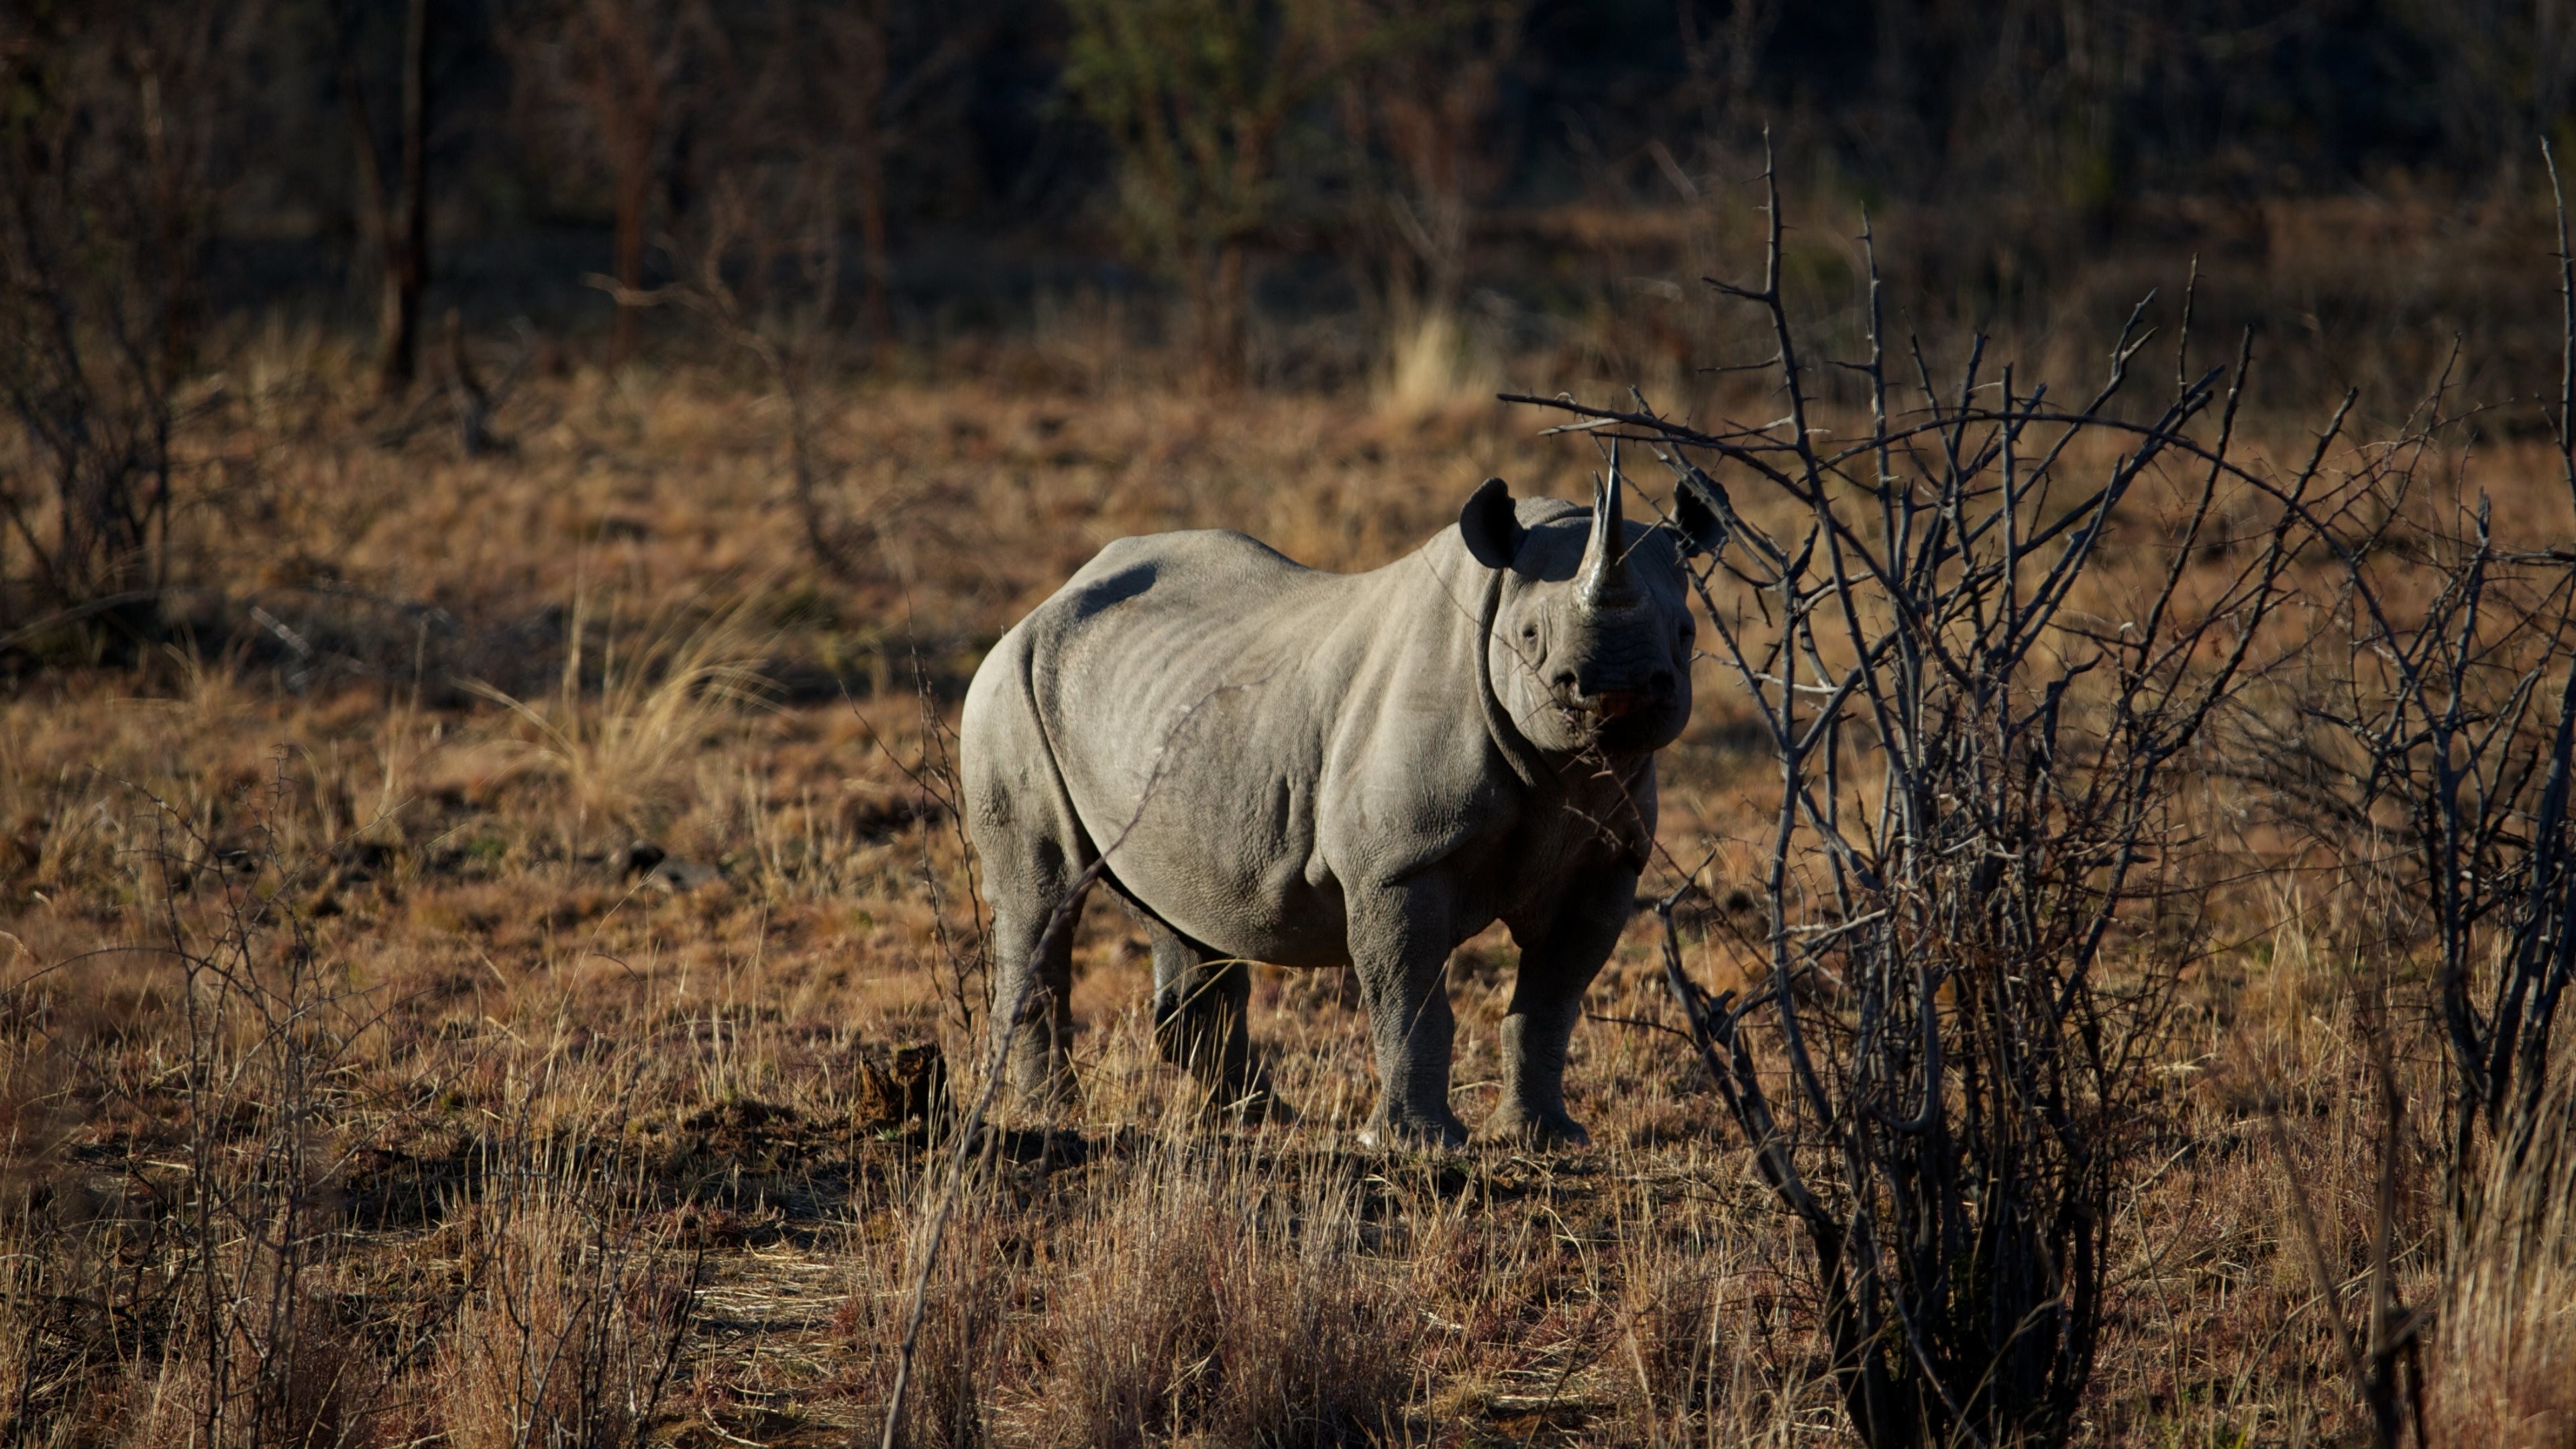 Multiple rhino wallpapers, Diverse rhino images, Rhino picture compilation, Rhino photo selection, 3840x2160 4K Desktop